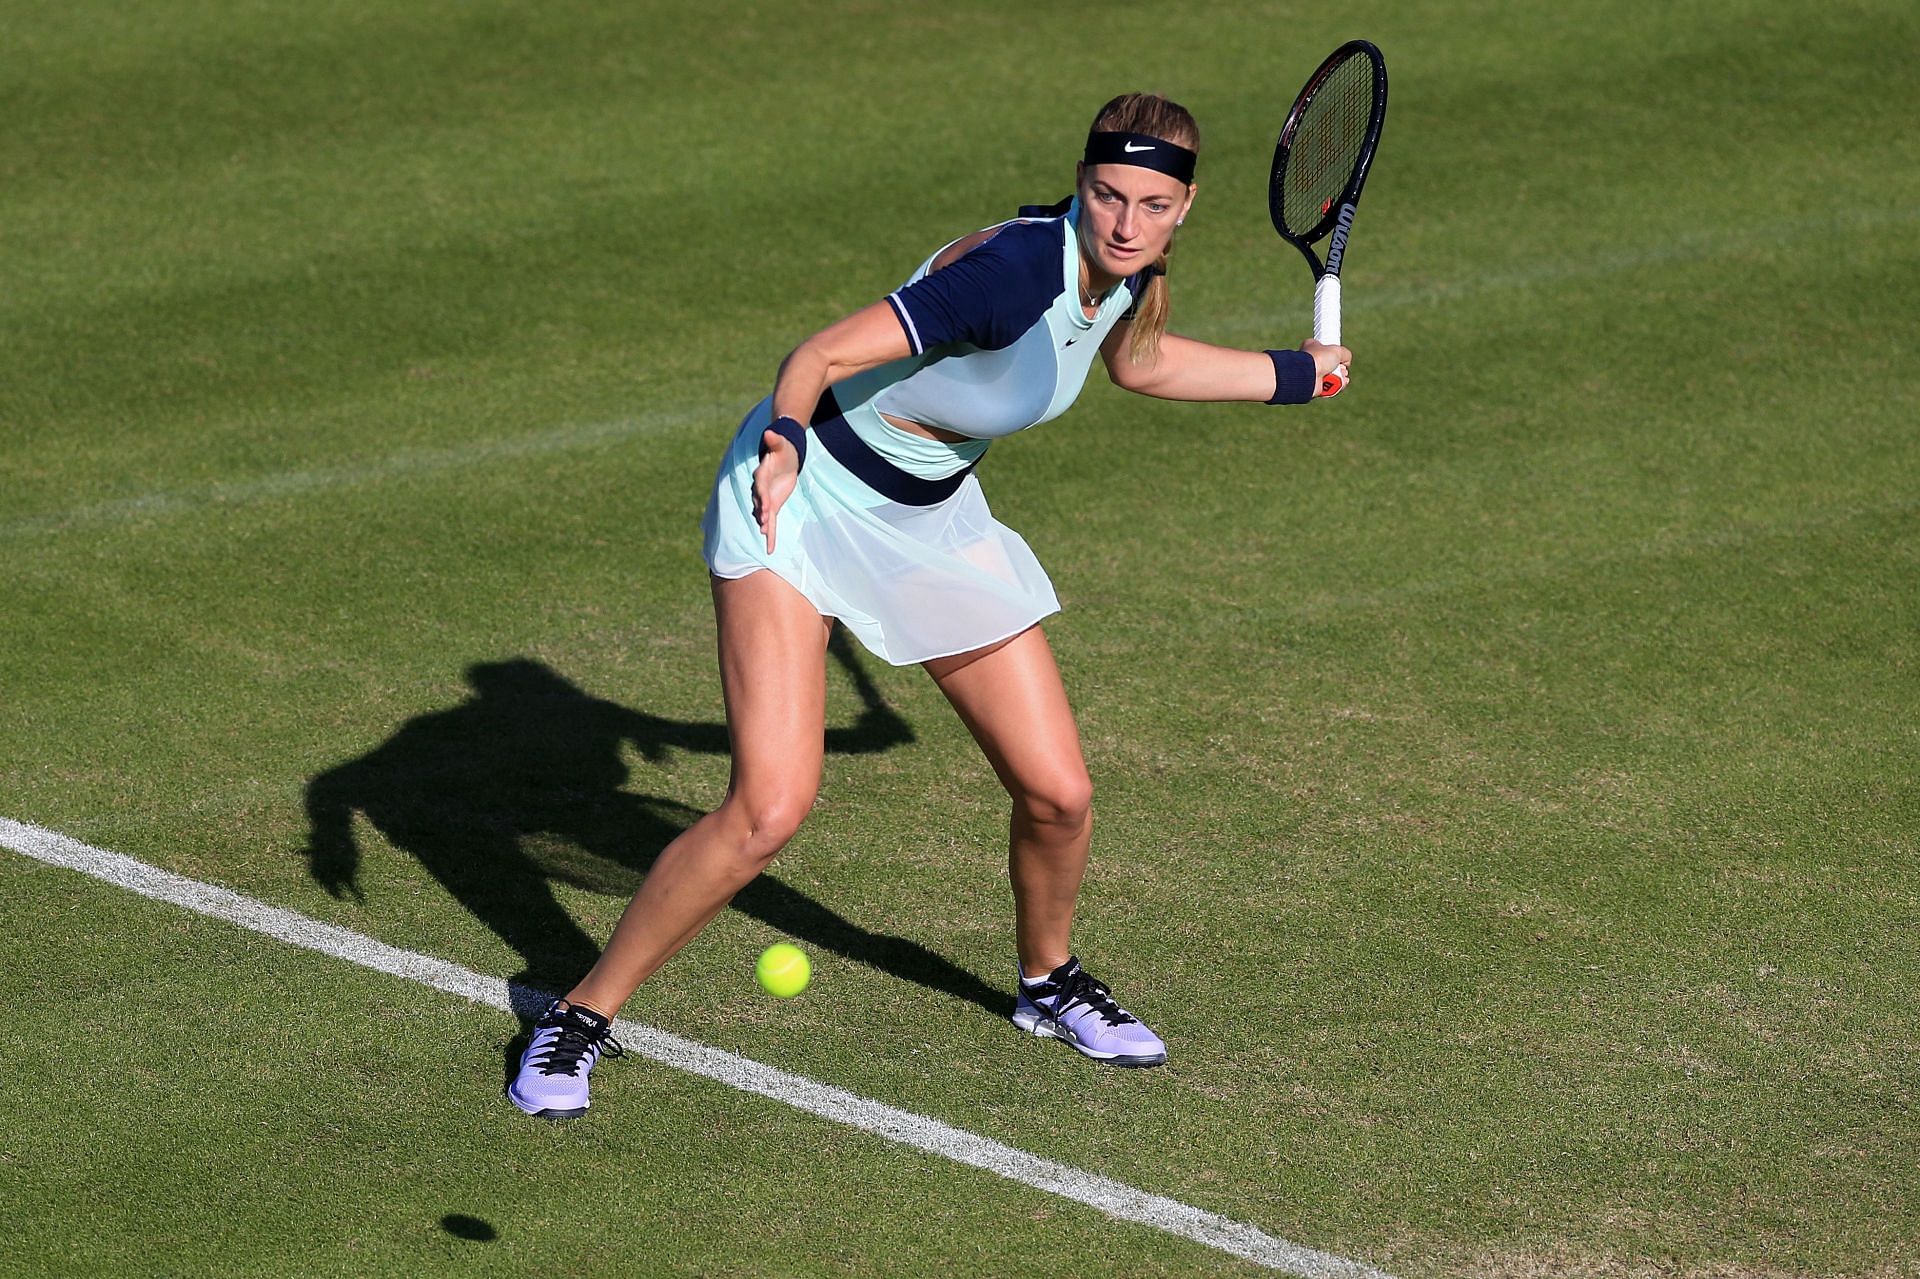 Kvitova will look to build on her dominant second-round win